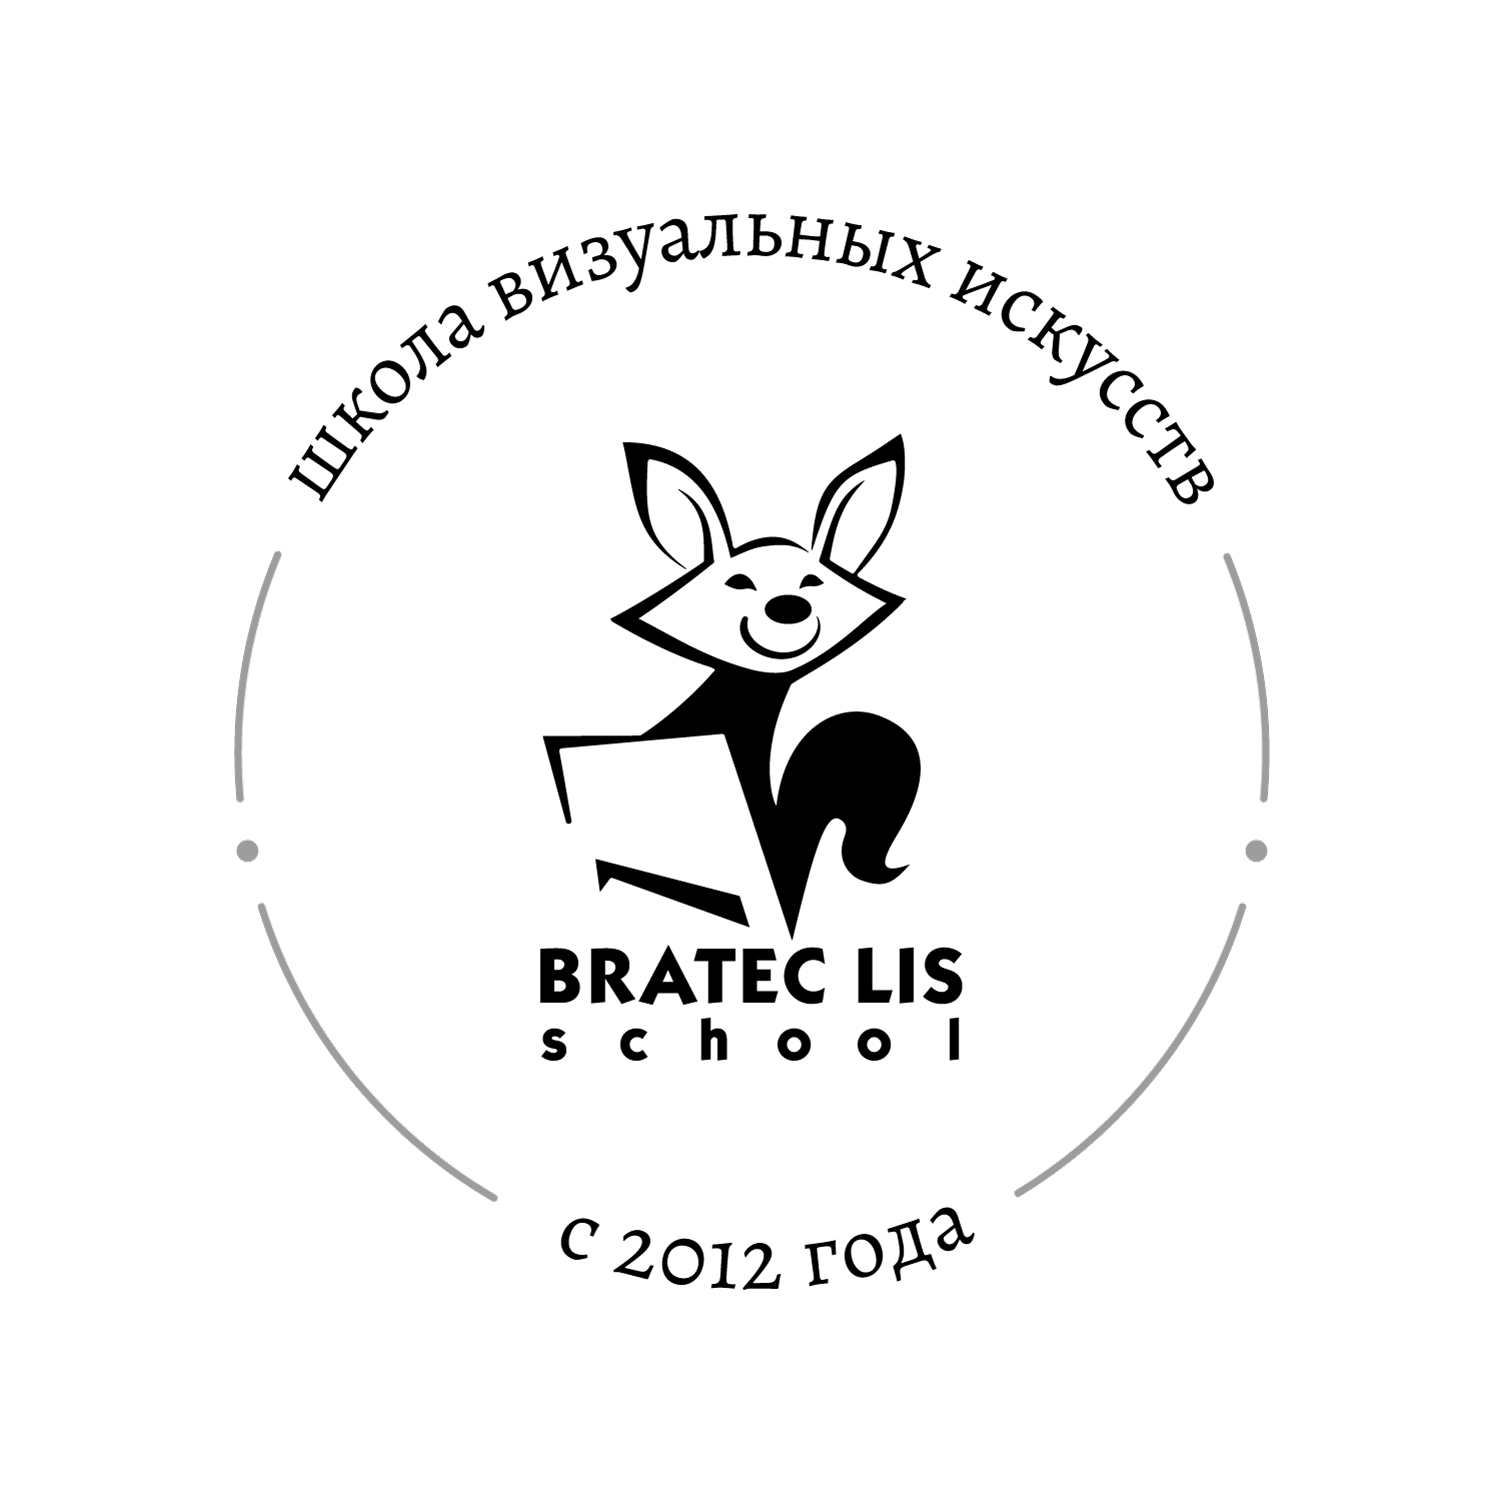 Bratec Lis School – онлайн-школа иллюстрации и живописи